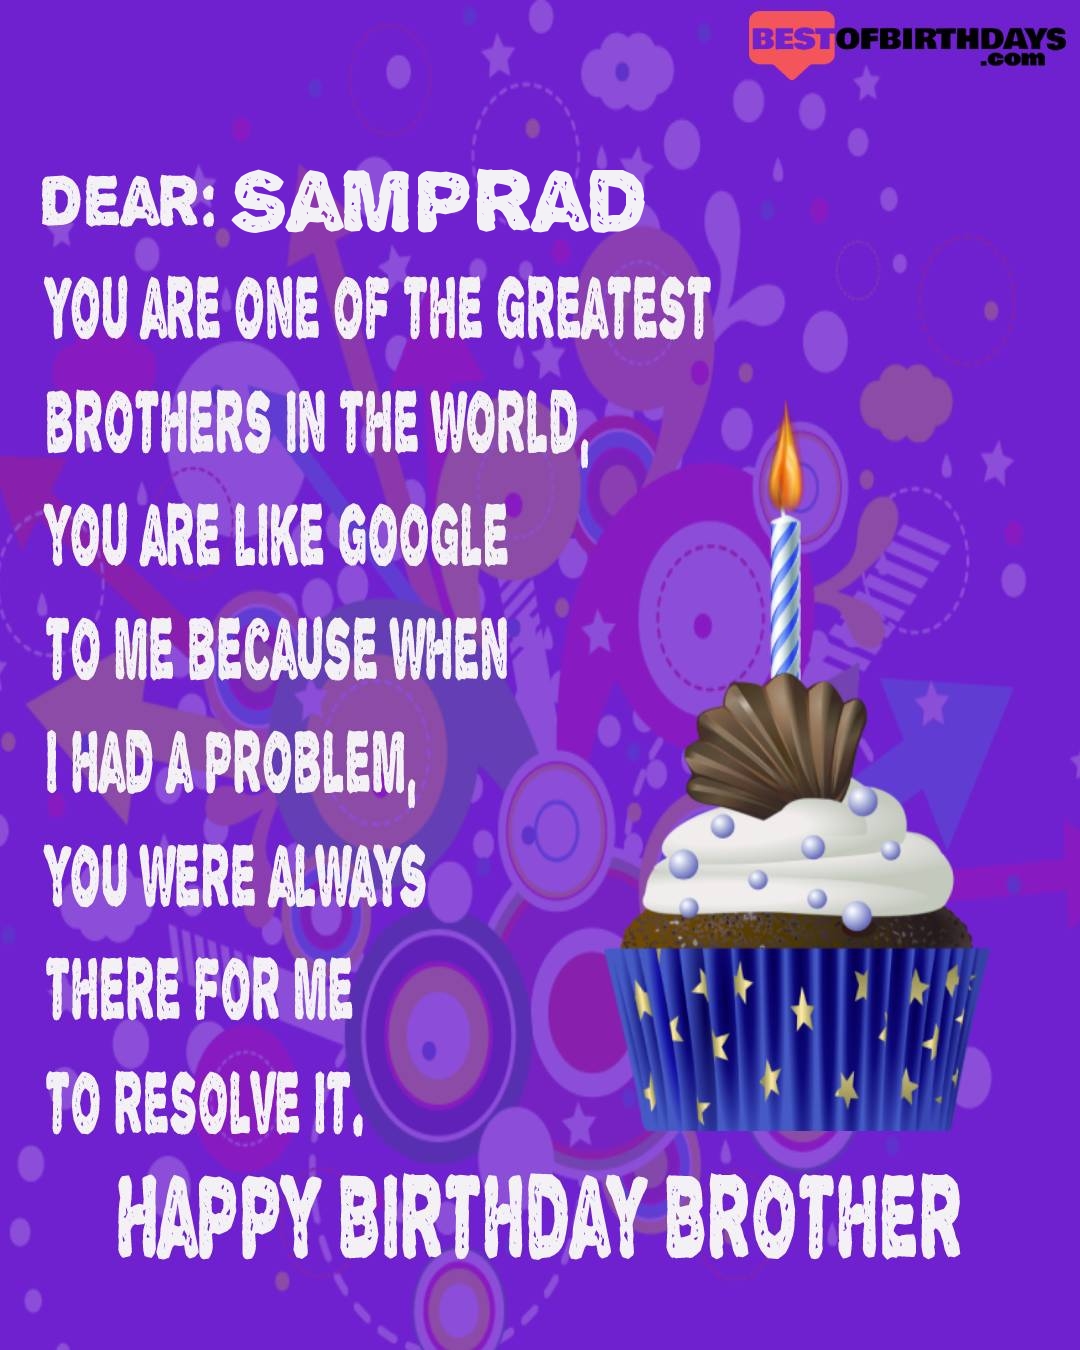 Happy birthday samprad bhai brother bro